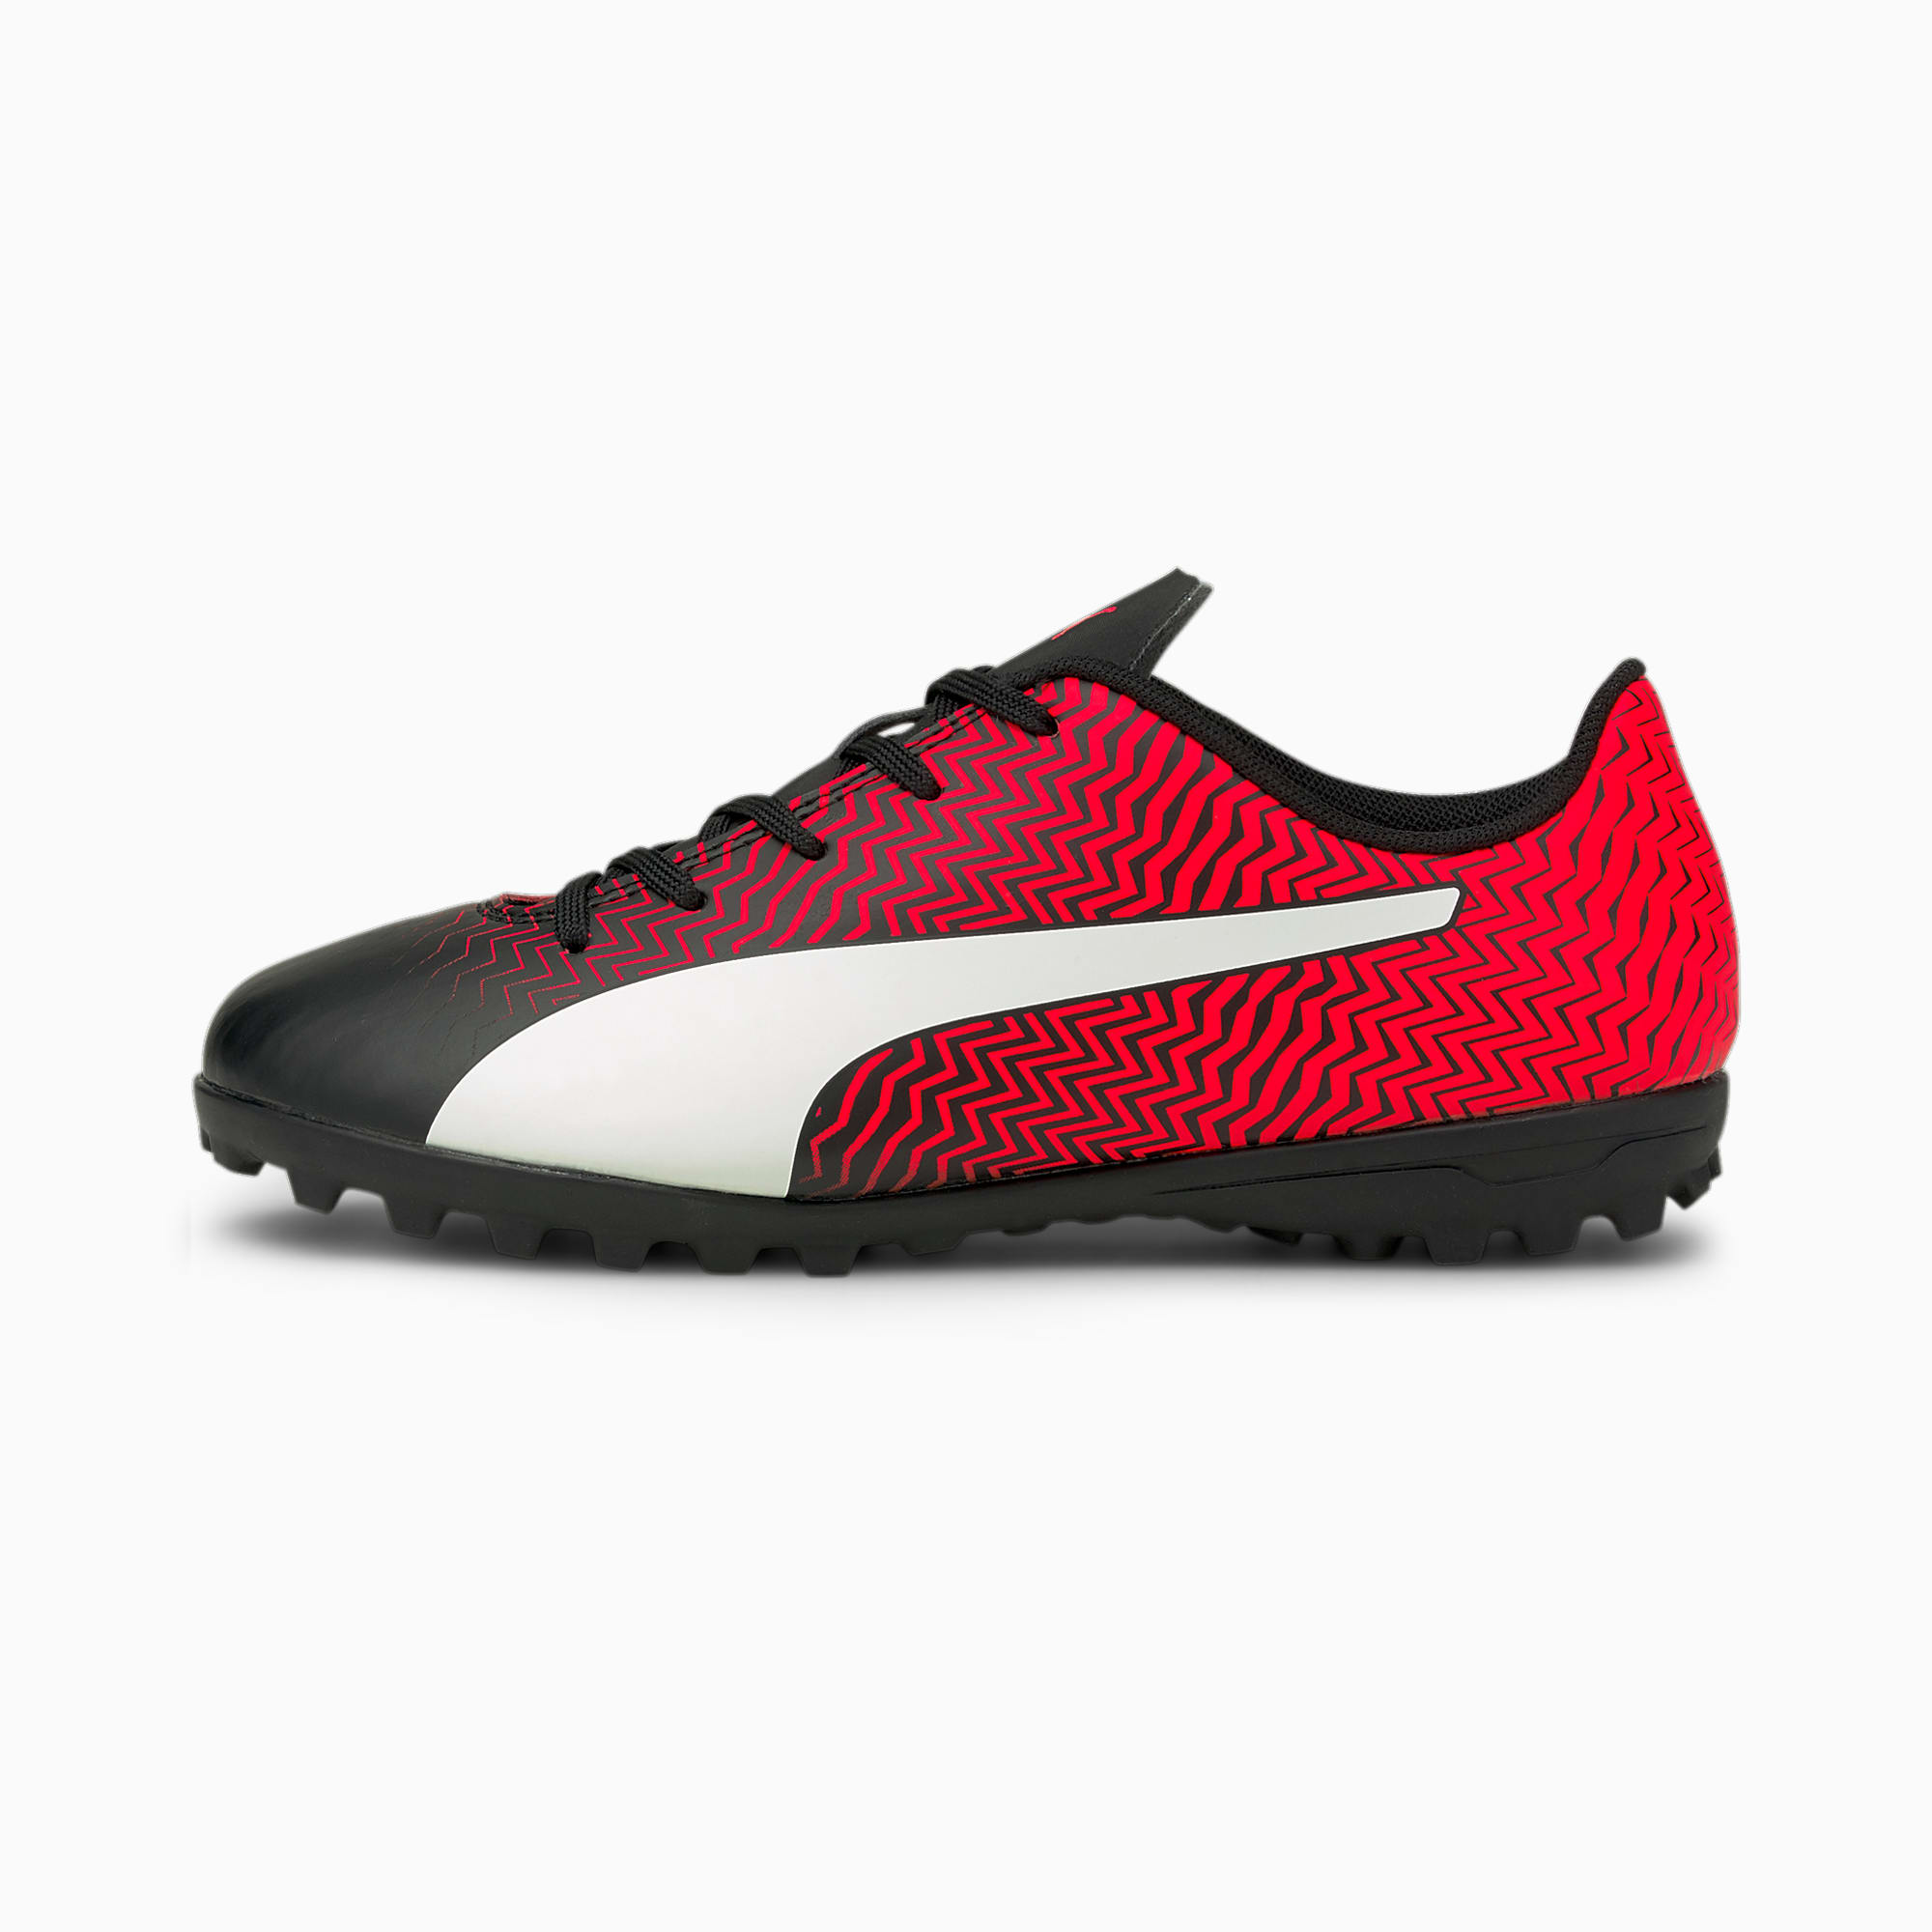 PUMA Chaussures de football Rapido II TT Youth pour Enfant, Noir/Rouge/Blanc, Taille 35, Chaussures